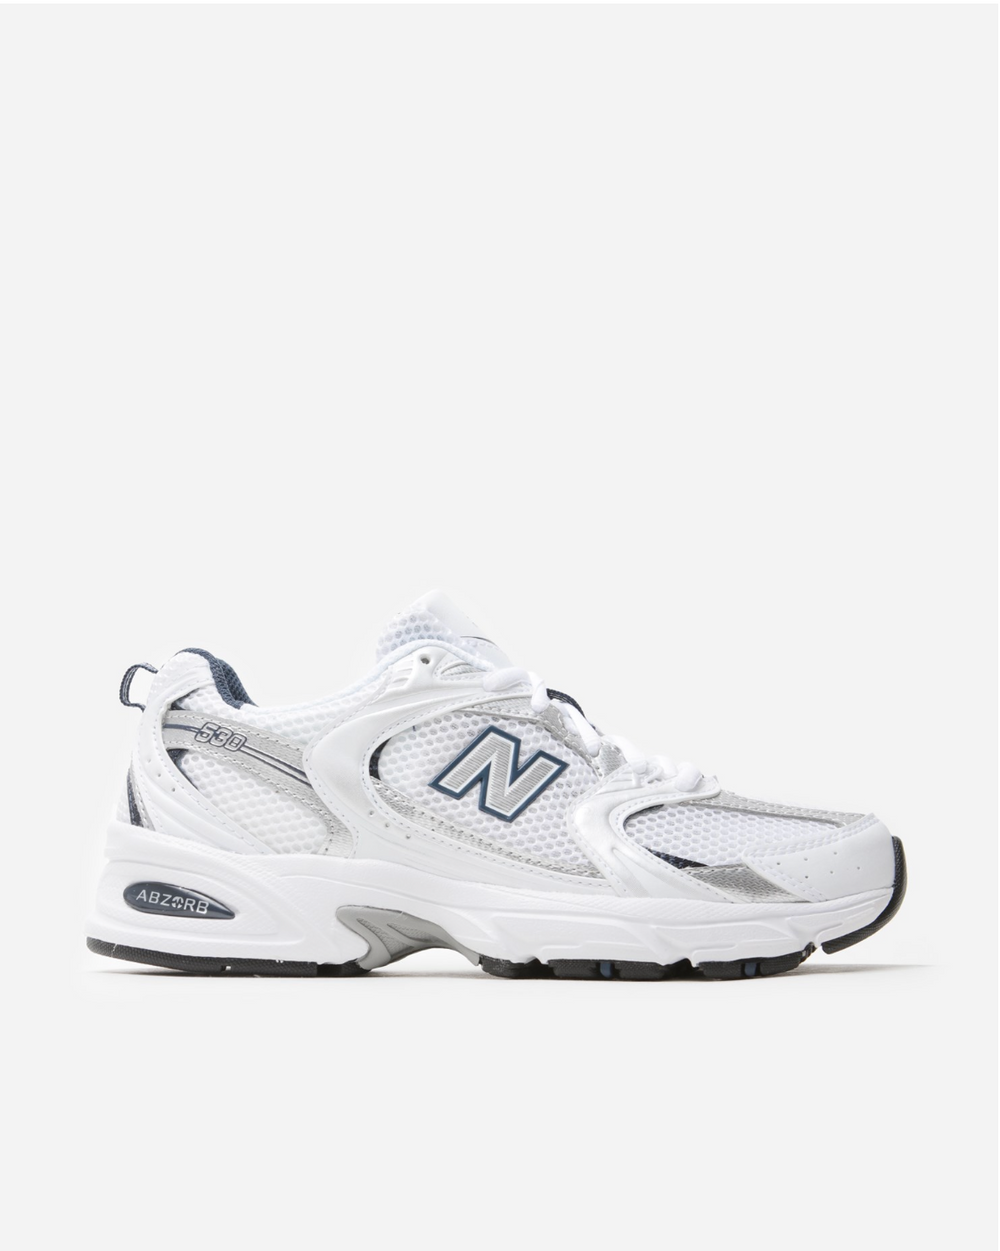 <tc>New Balance MR530SG White/Navy Unisex Running Sneaker</tc>